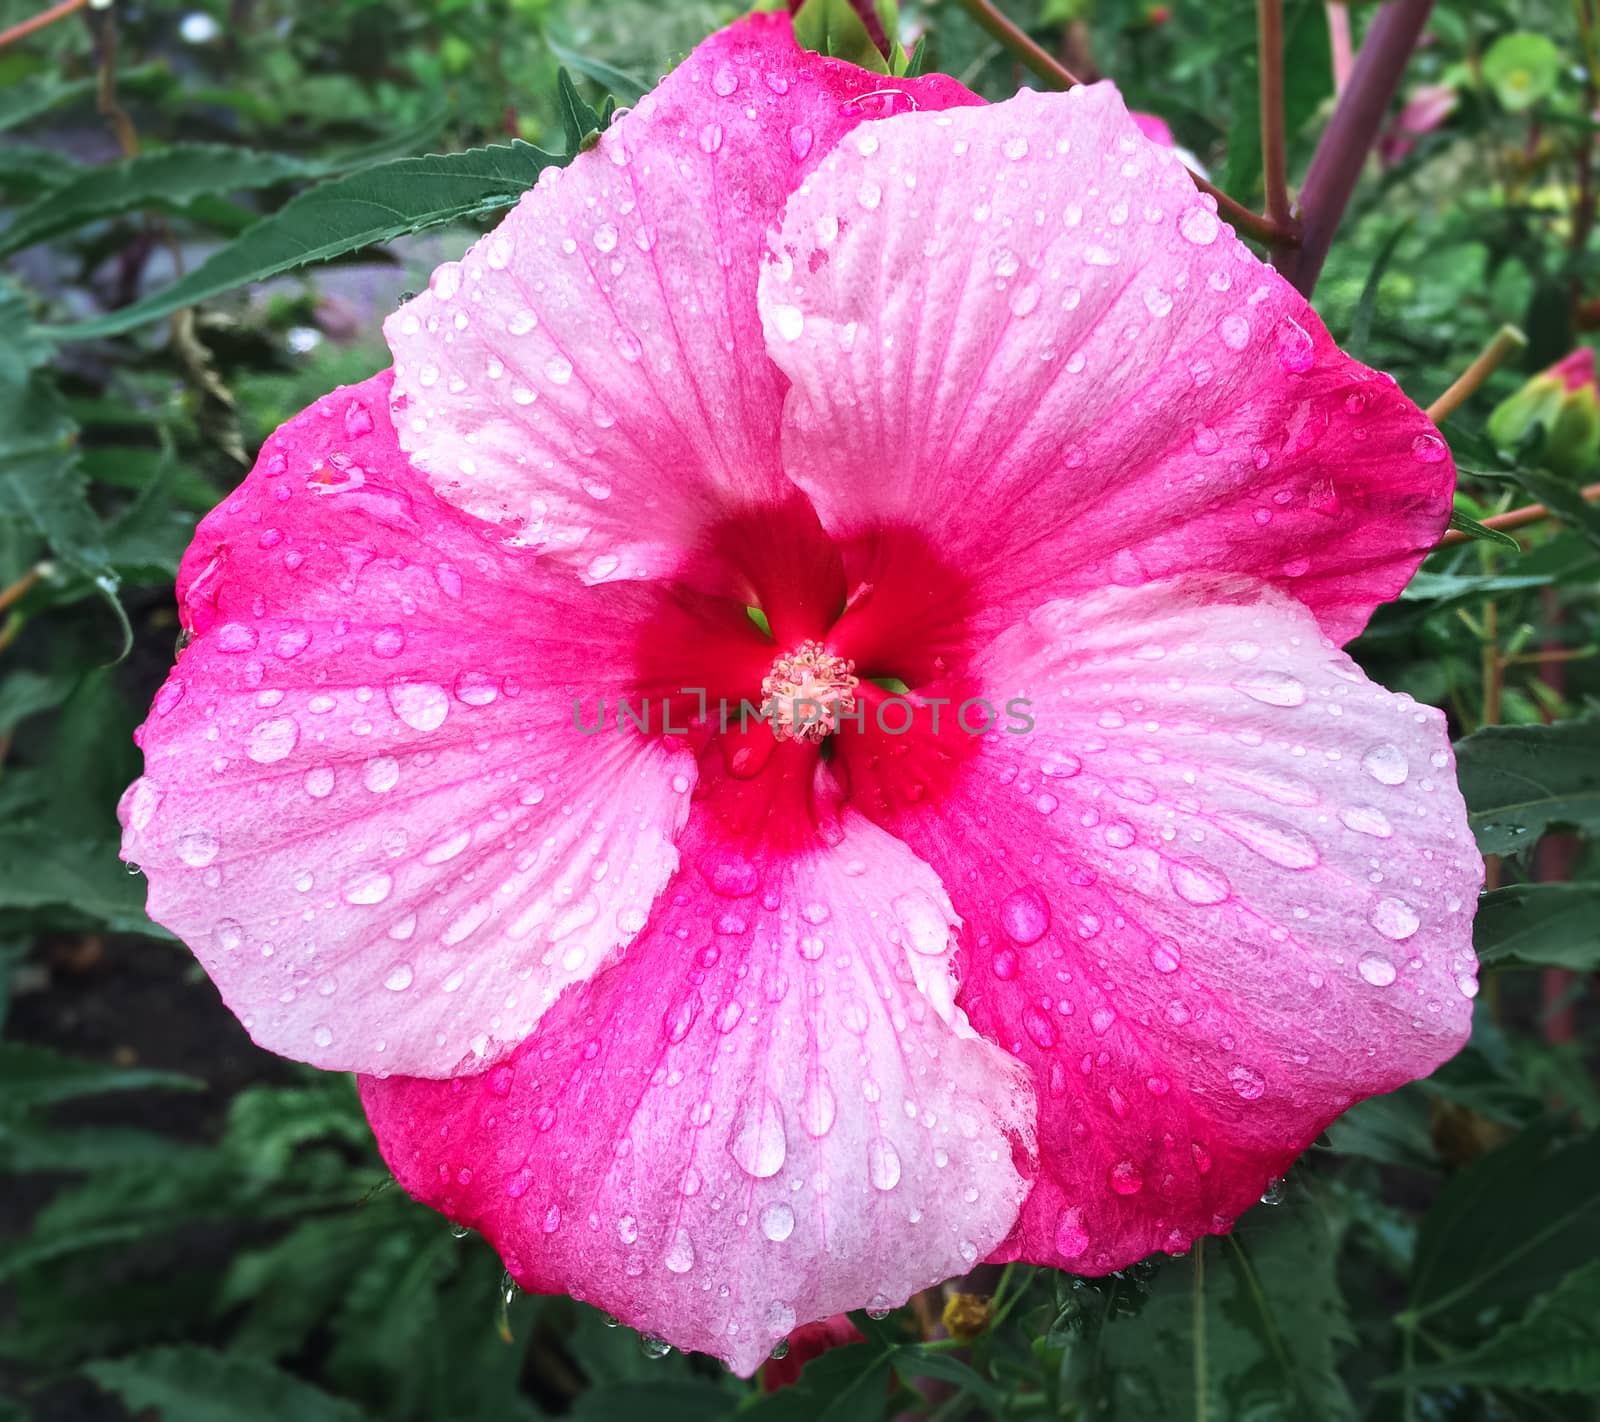 Beautiful pink hibiscus flower in raindrops by anikasalsera